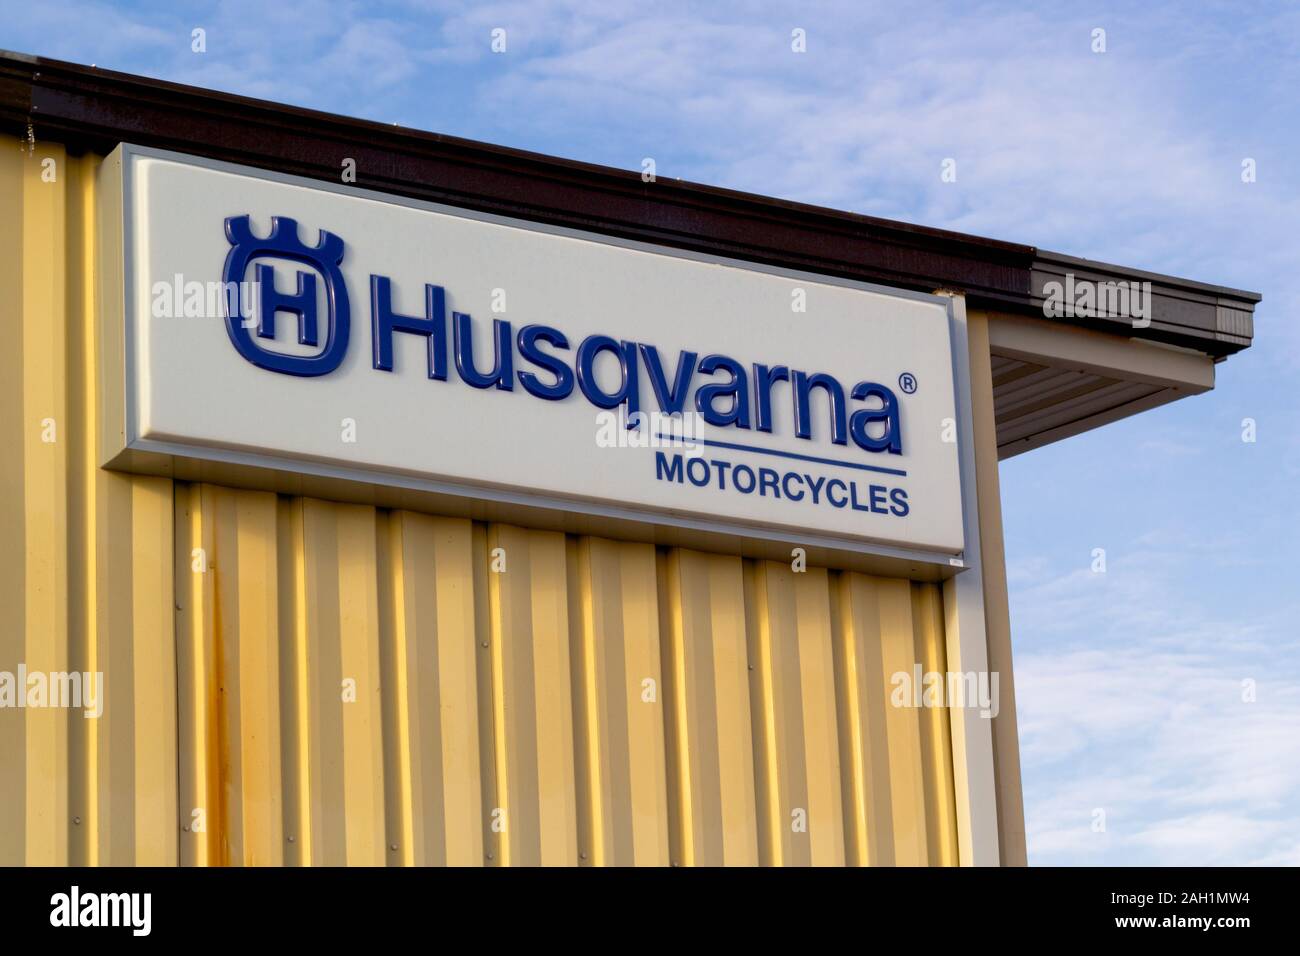 Truro, Canada - December 22, 2019: Husqvarna motorcycles sign. Husqvarna is a Swedish brand operating several companies. Stock Photo